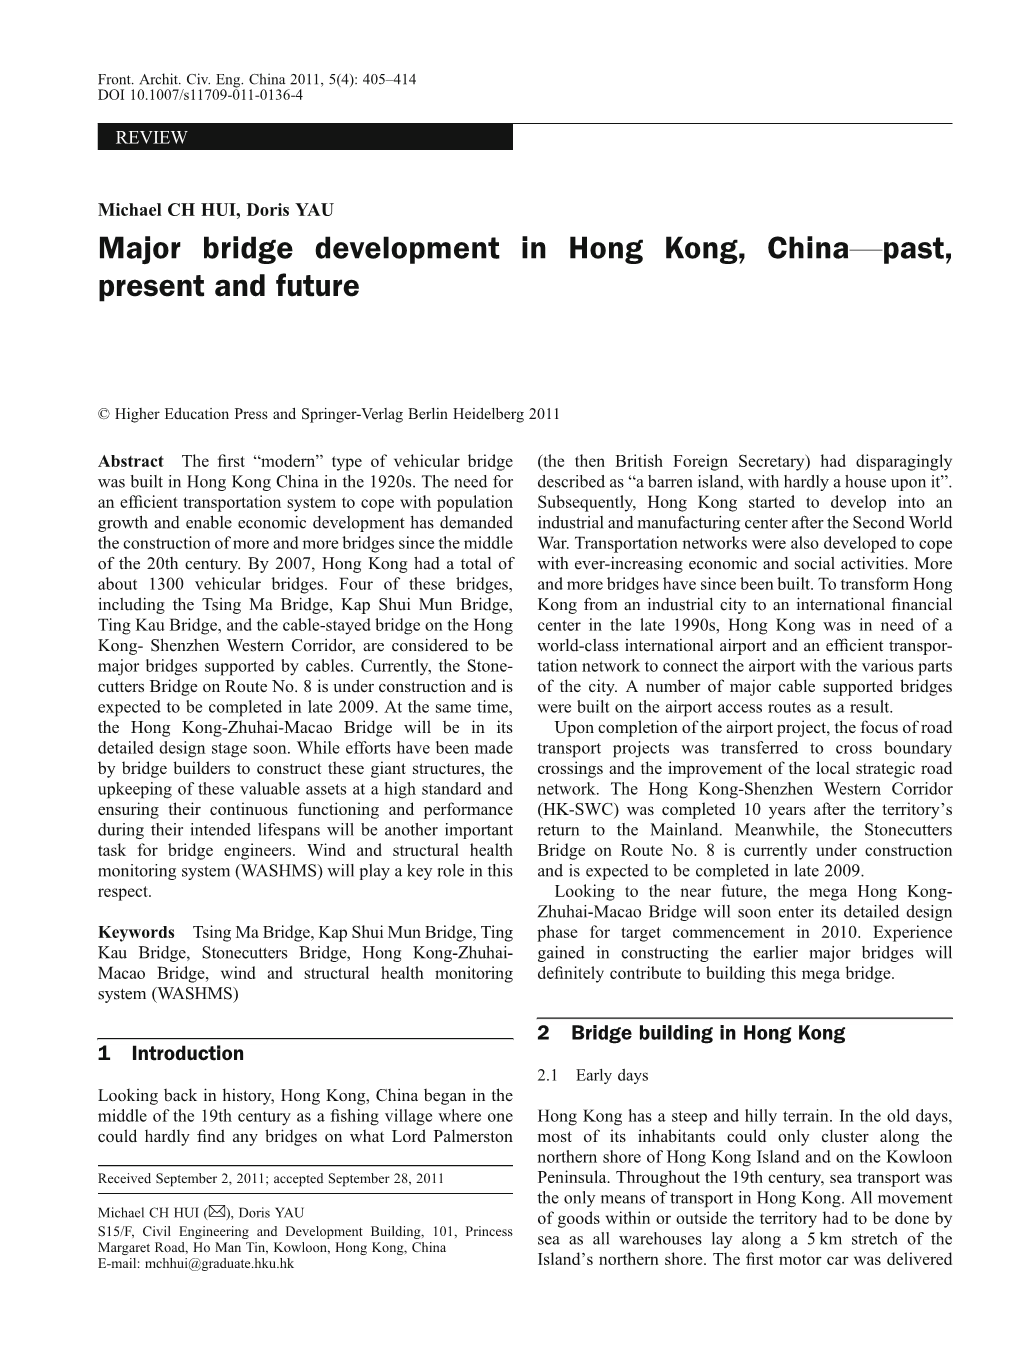 Major Bridge Development in Hong Kong, China—Past, Present and Future